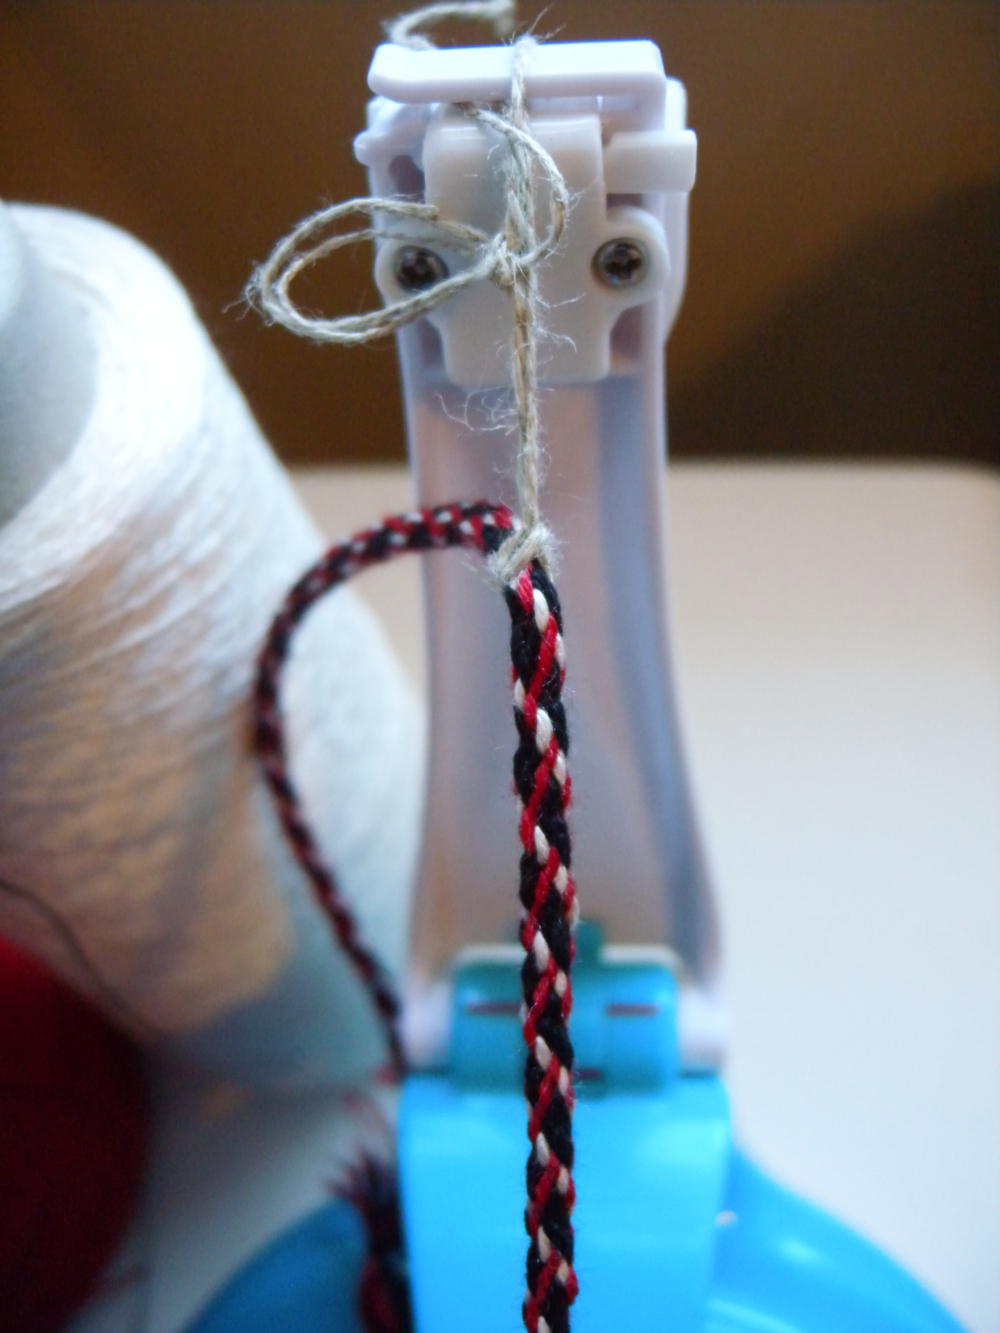 Knitting Machine Handheld Yarn Winder Fiber String Line Ball Winding Manual Wool Winder Machine Sewing Accessories, Size: 18